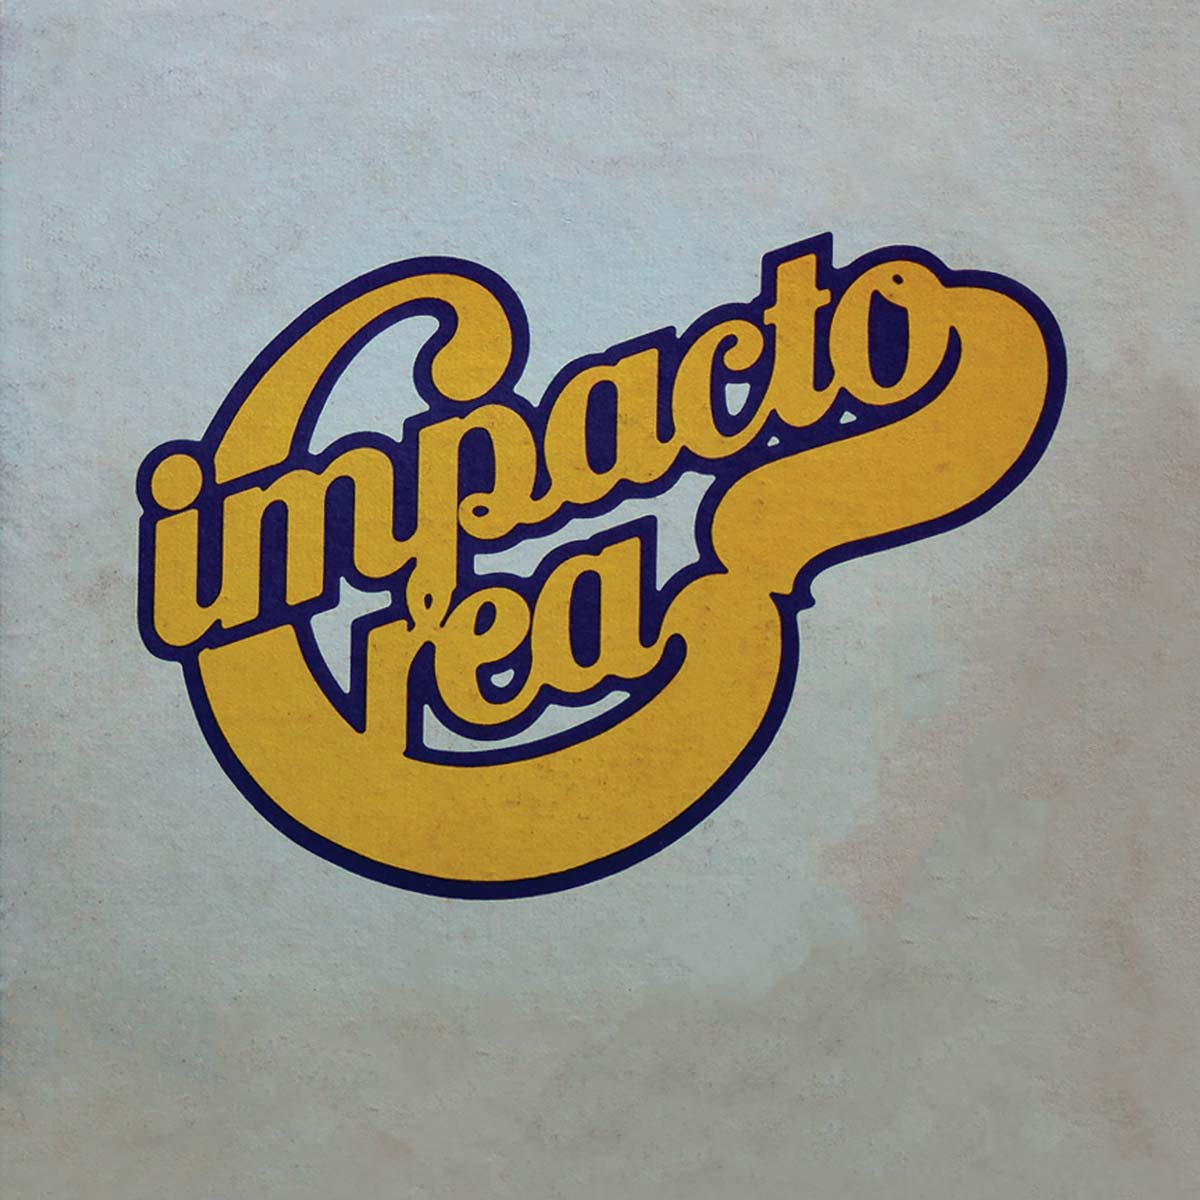 Featured Image for “IMPACTO CREA”